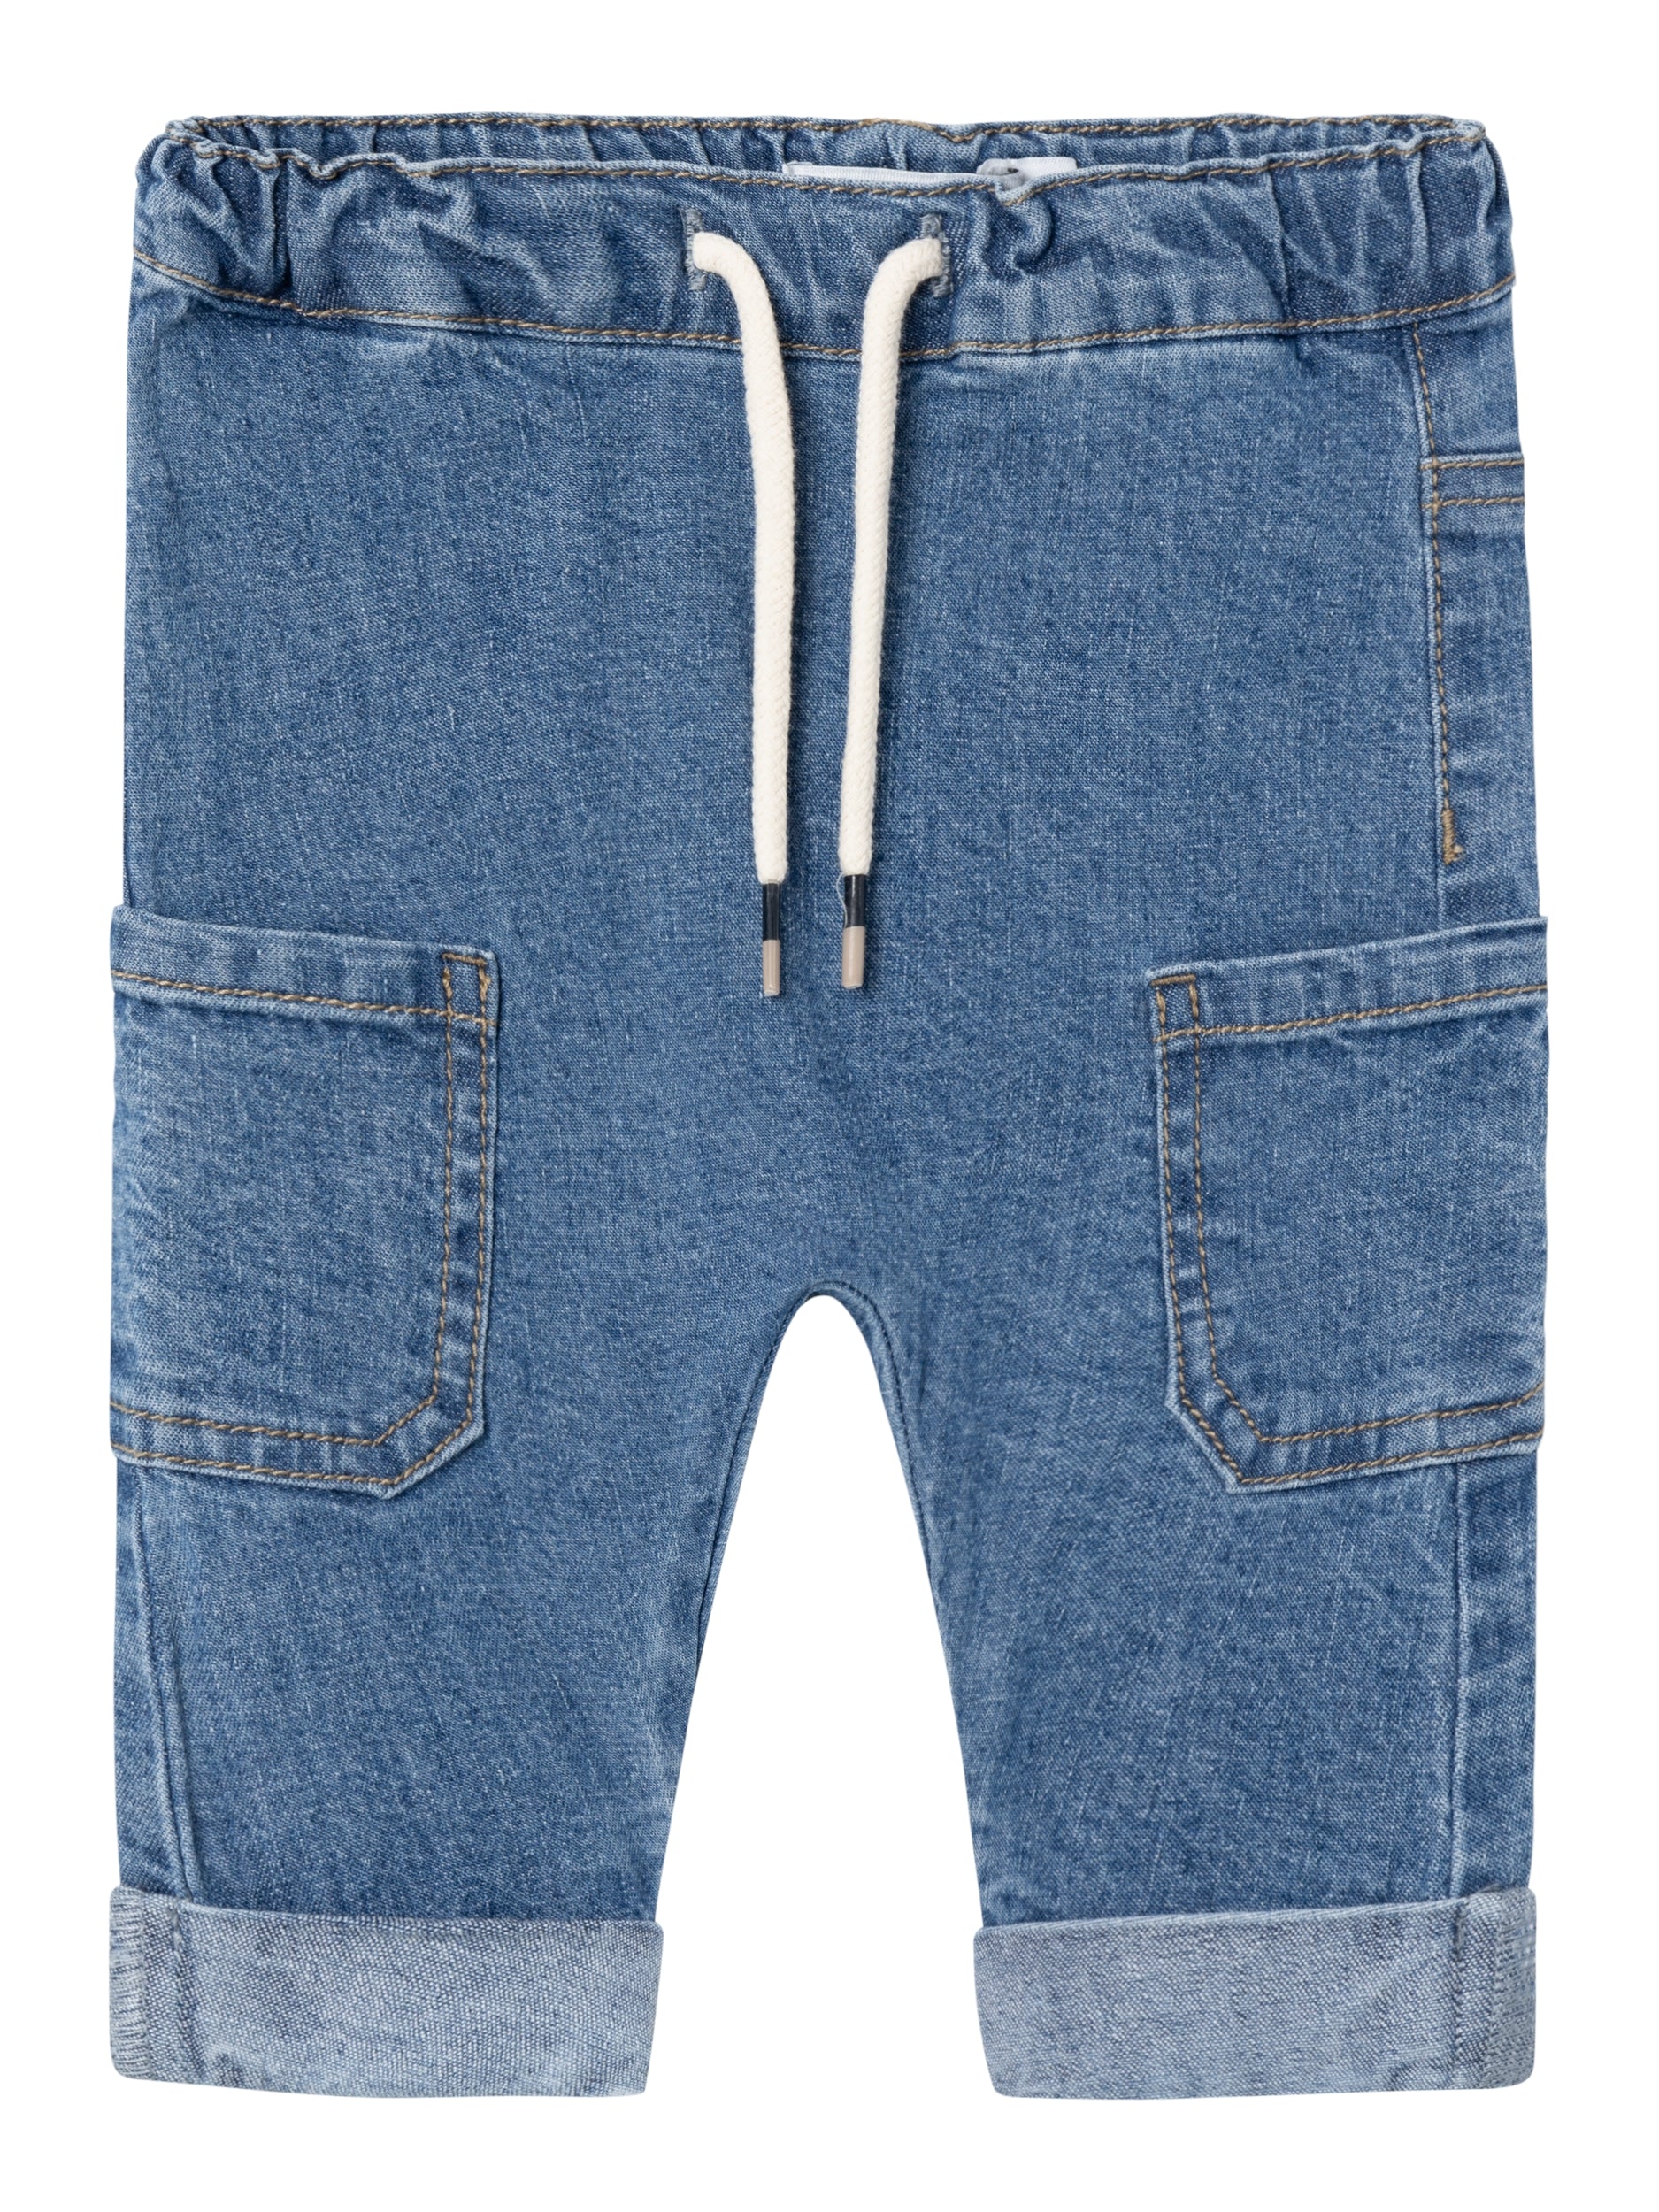 Boy's Ben U-shape Jeans Pant Dark Blue Denim-Front View